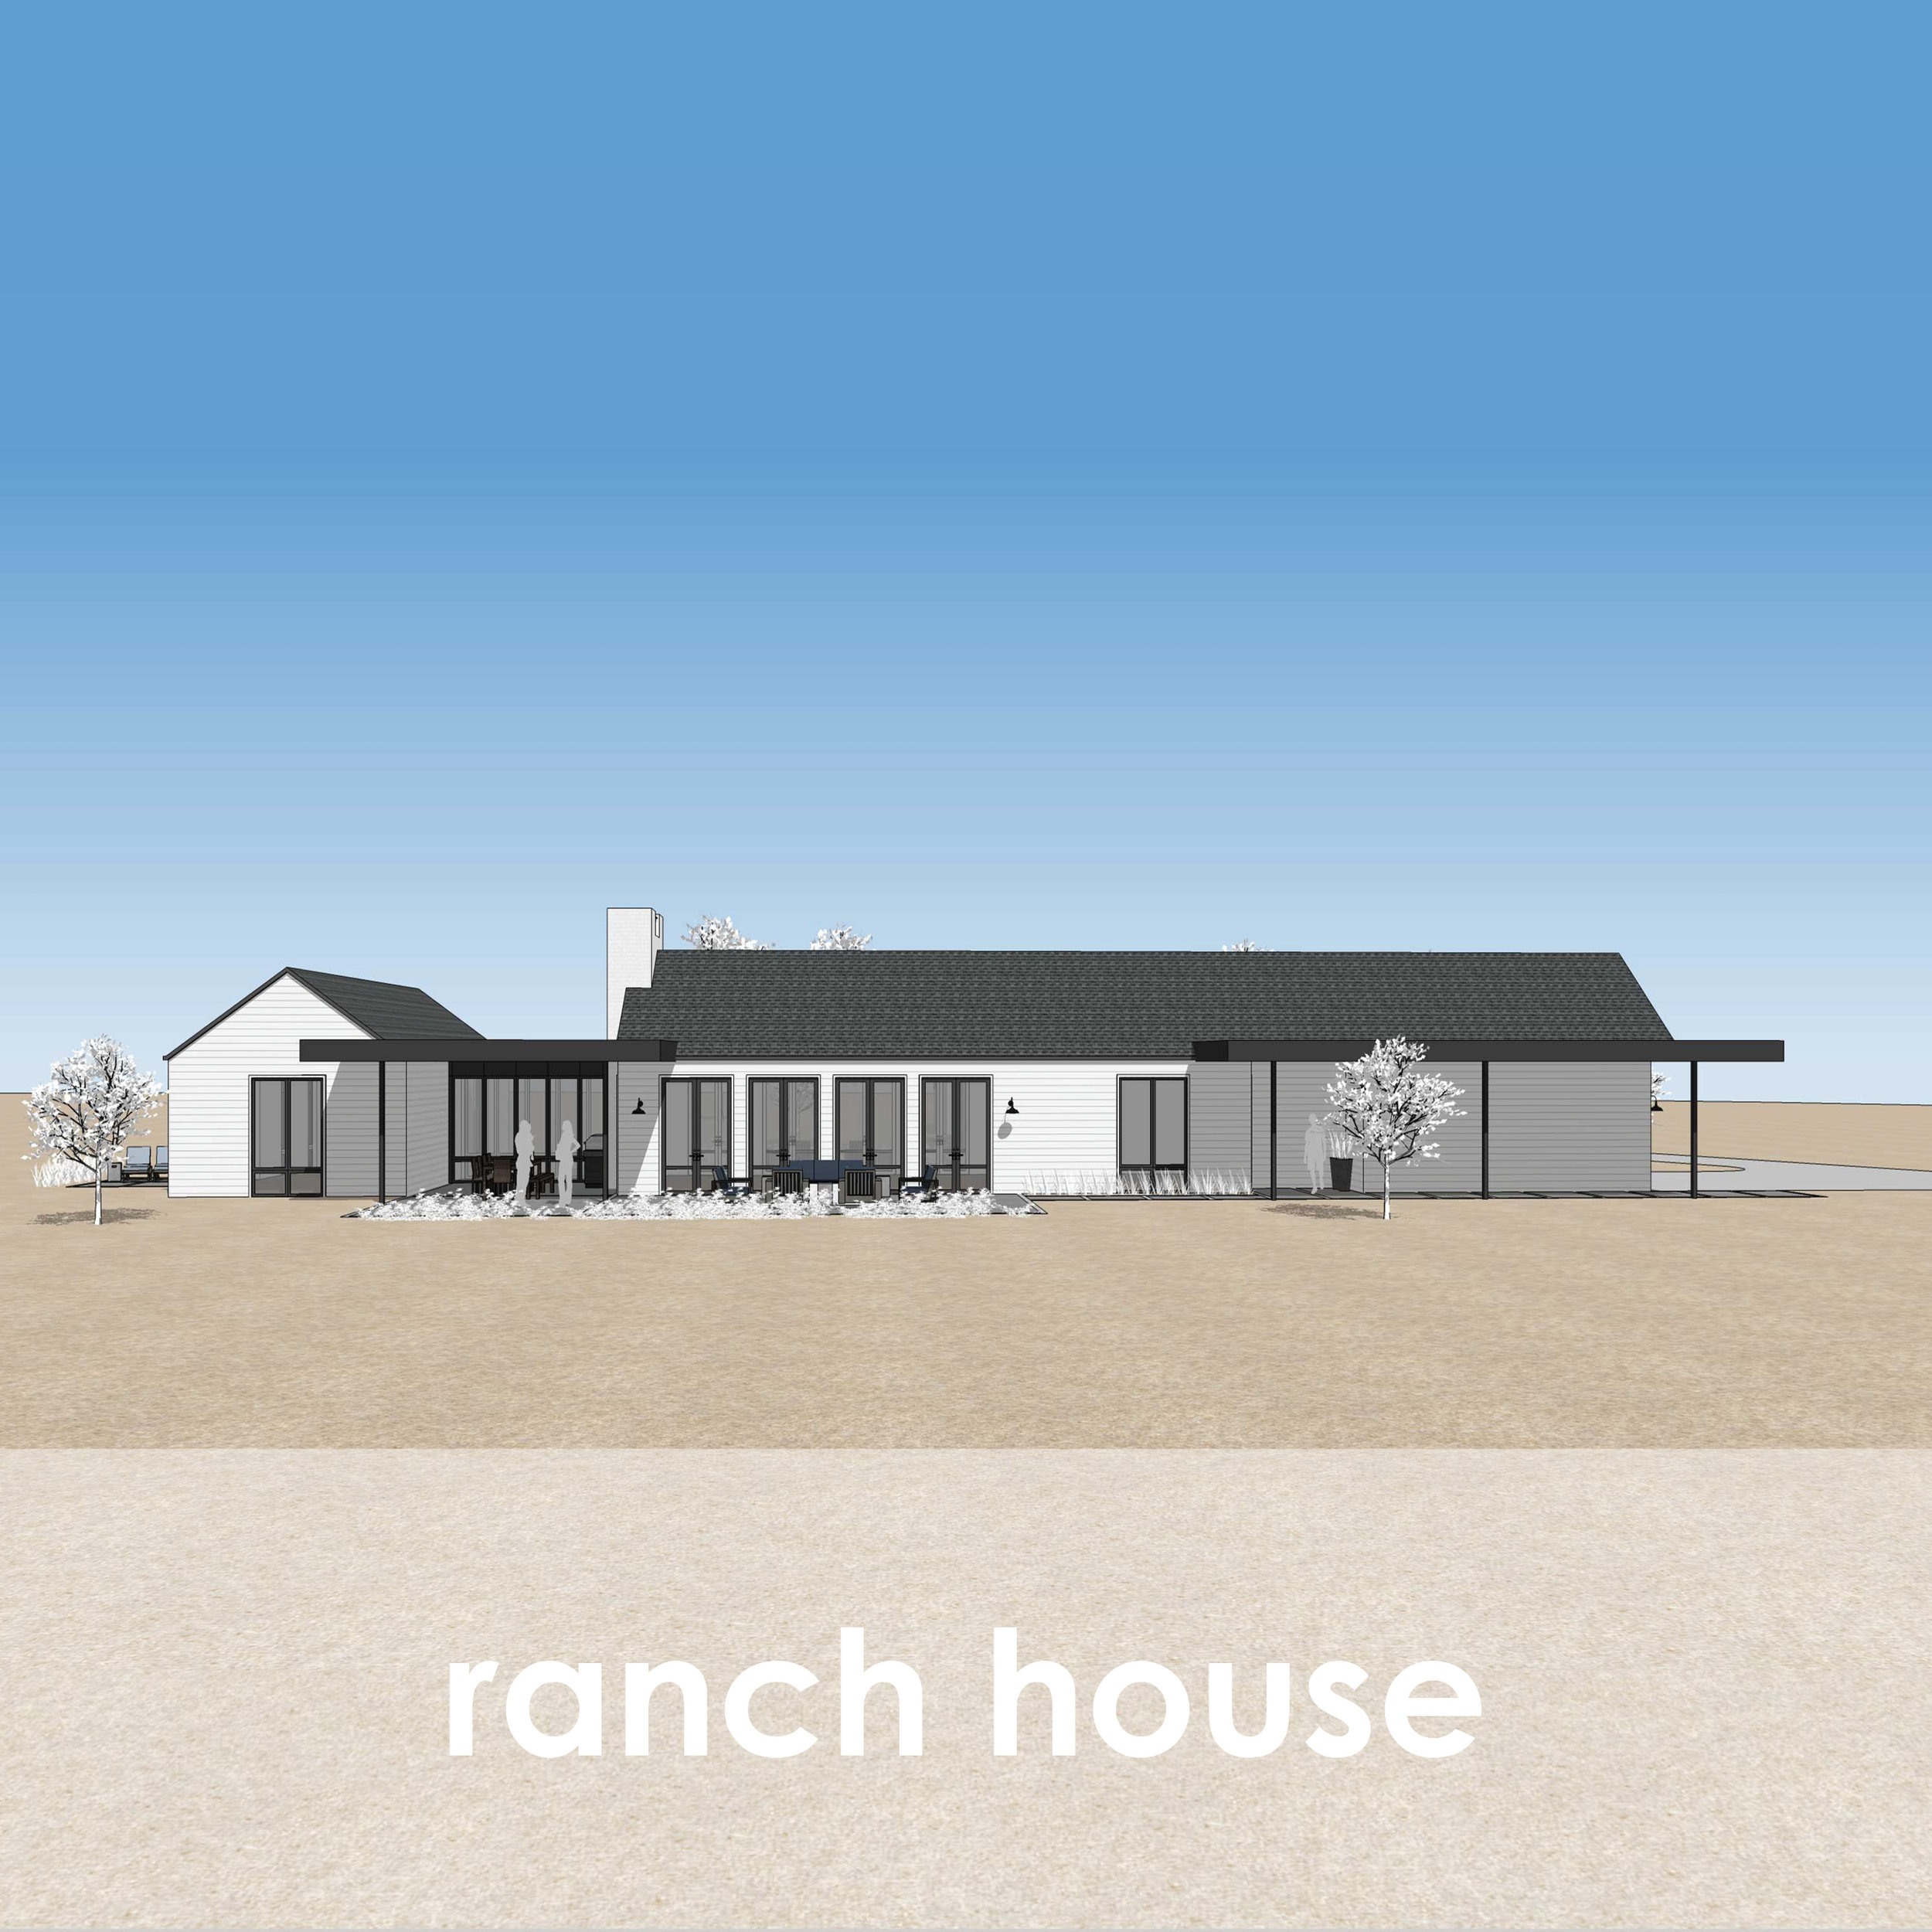 clausen-ranch house.jpg